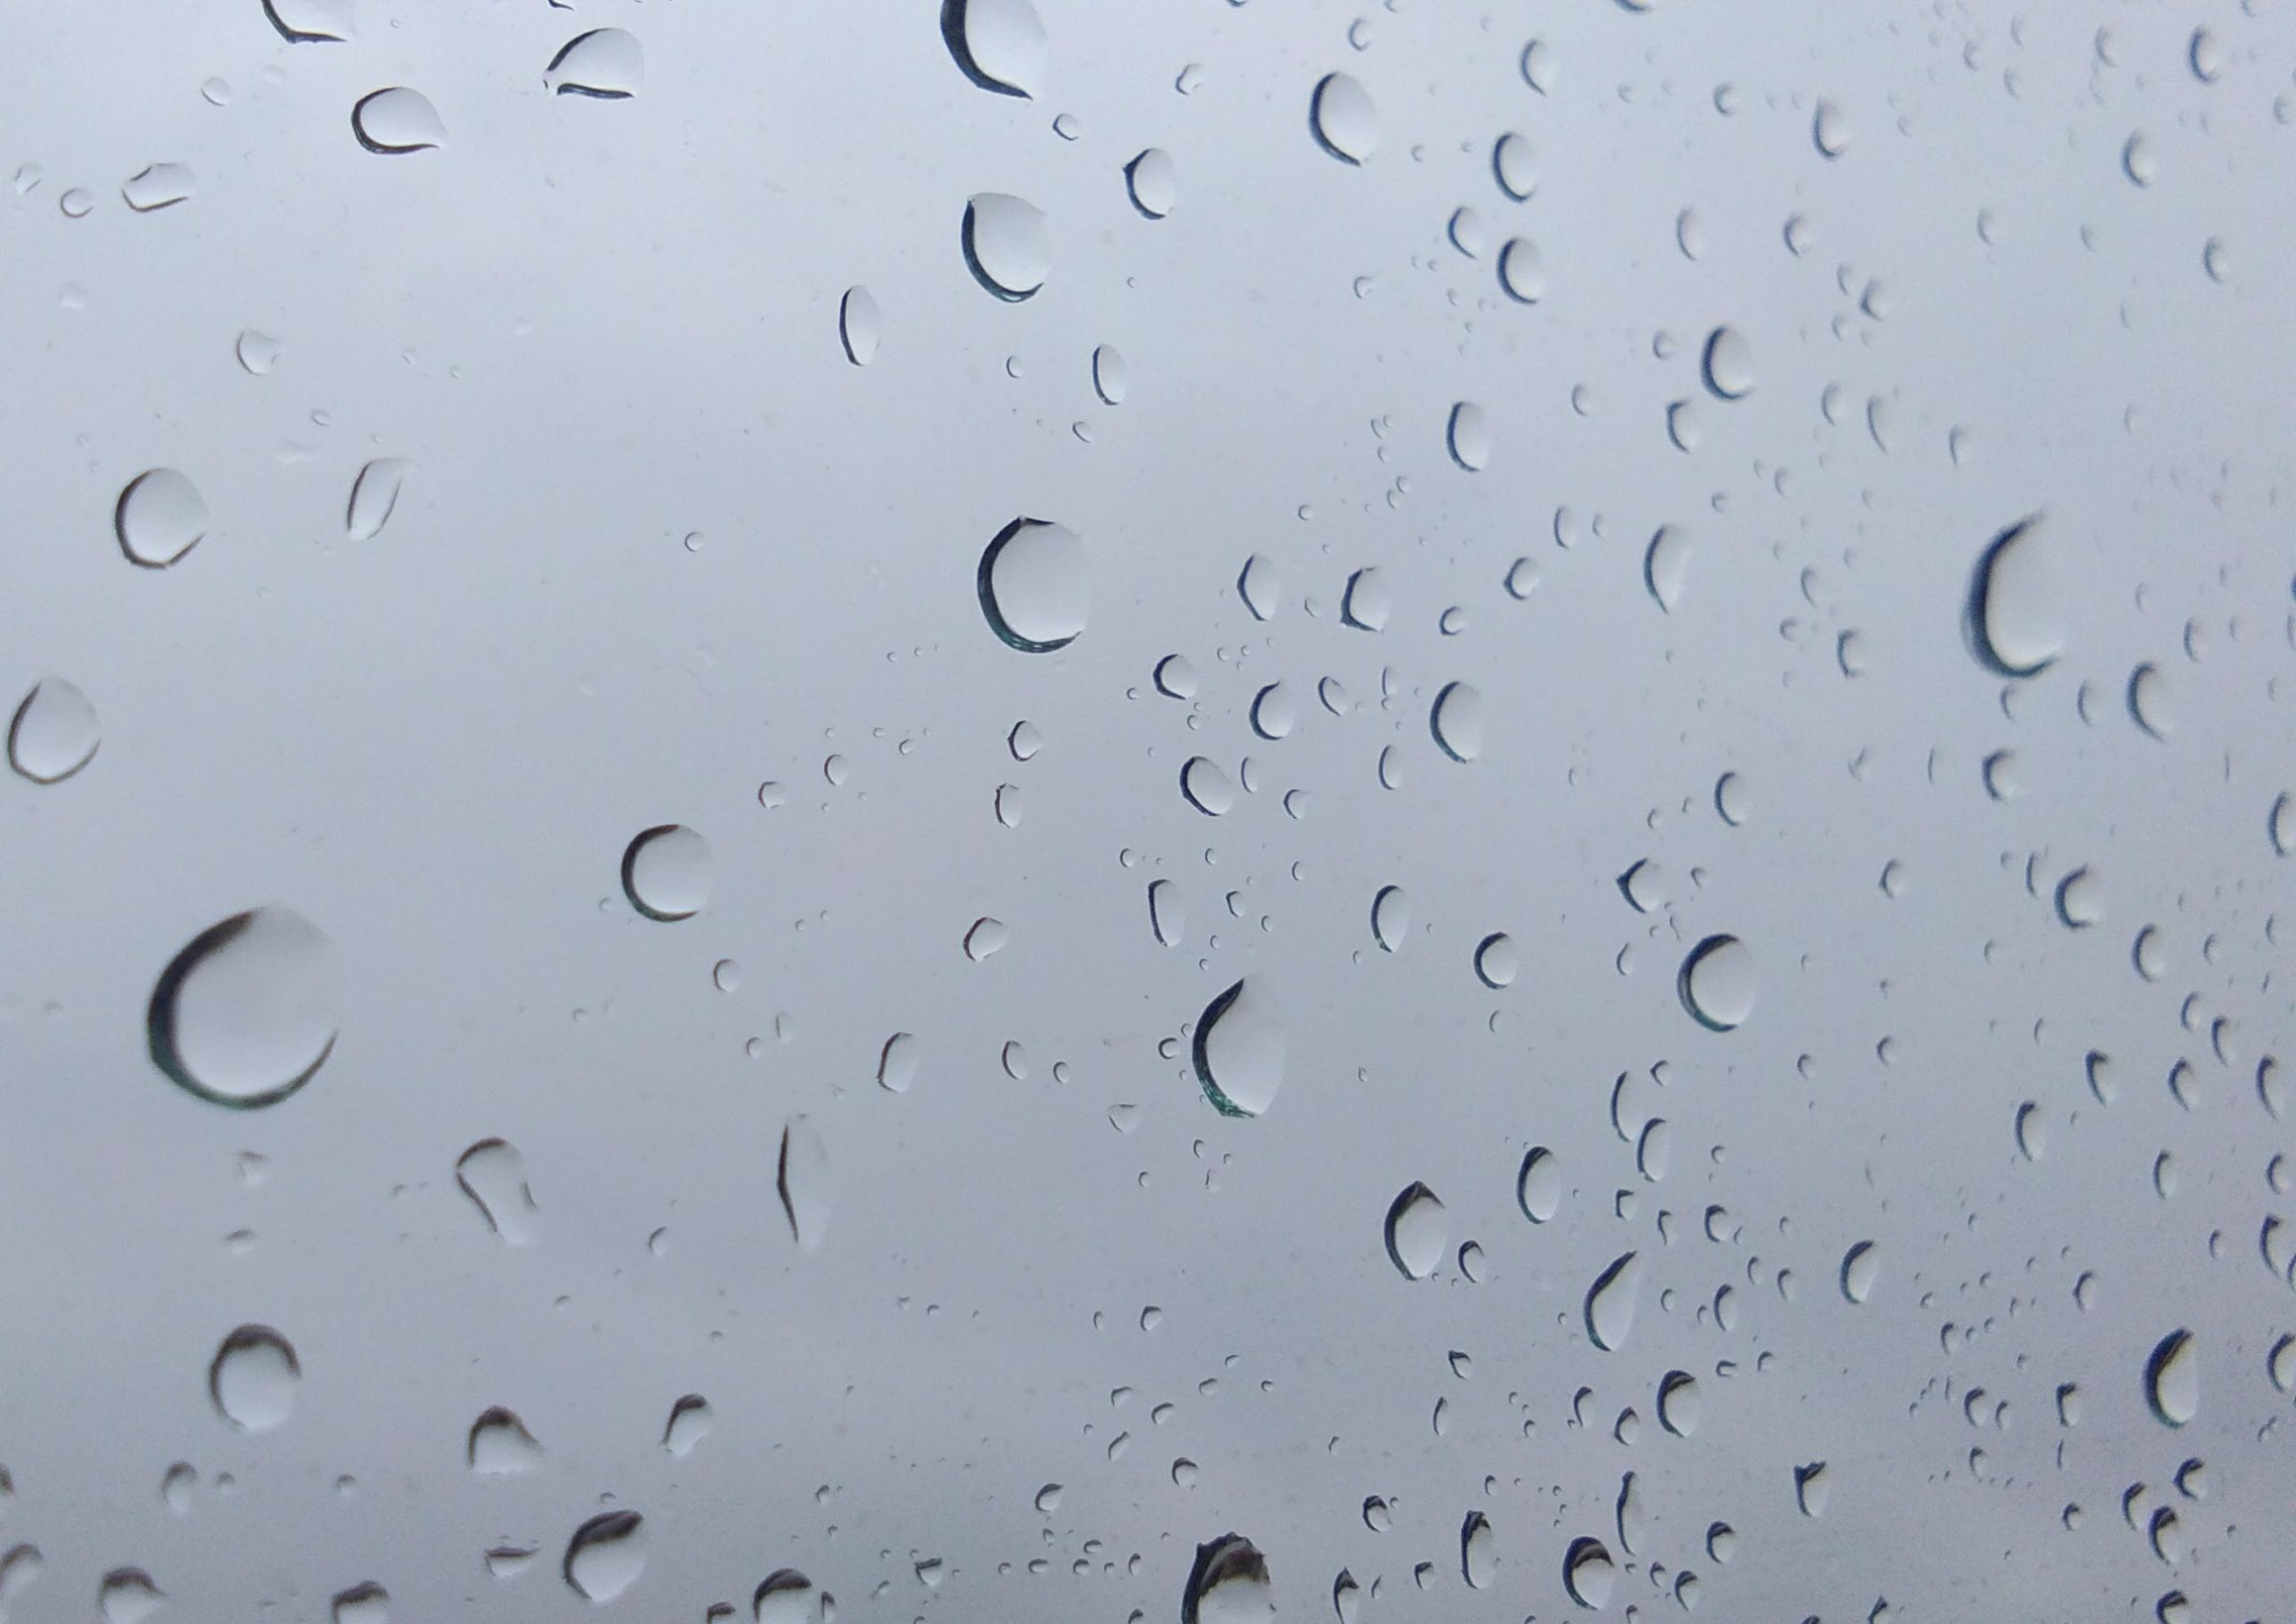 Landscape of rain drops on glass